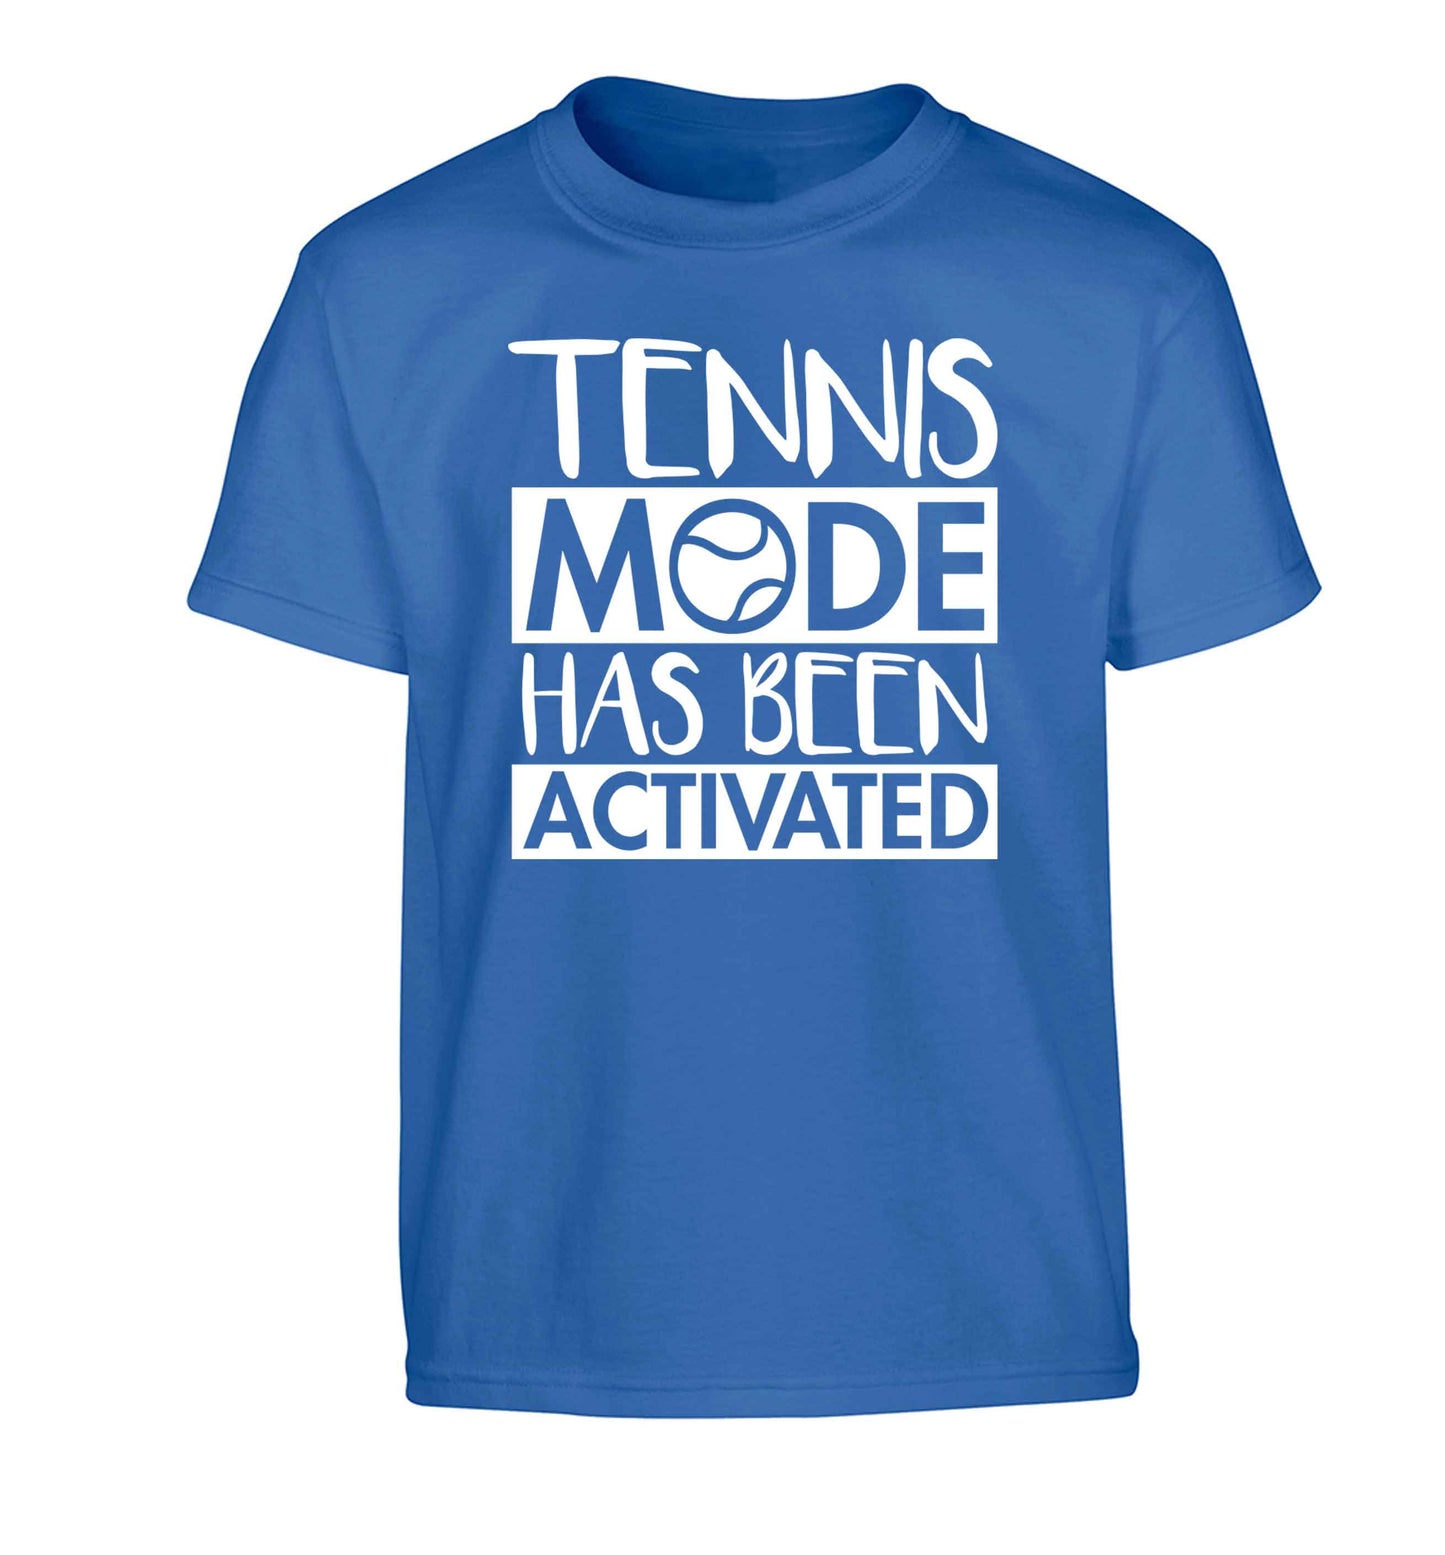 Tennis mode has been activated Children's blue Tshirt 12-13 Years